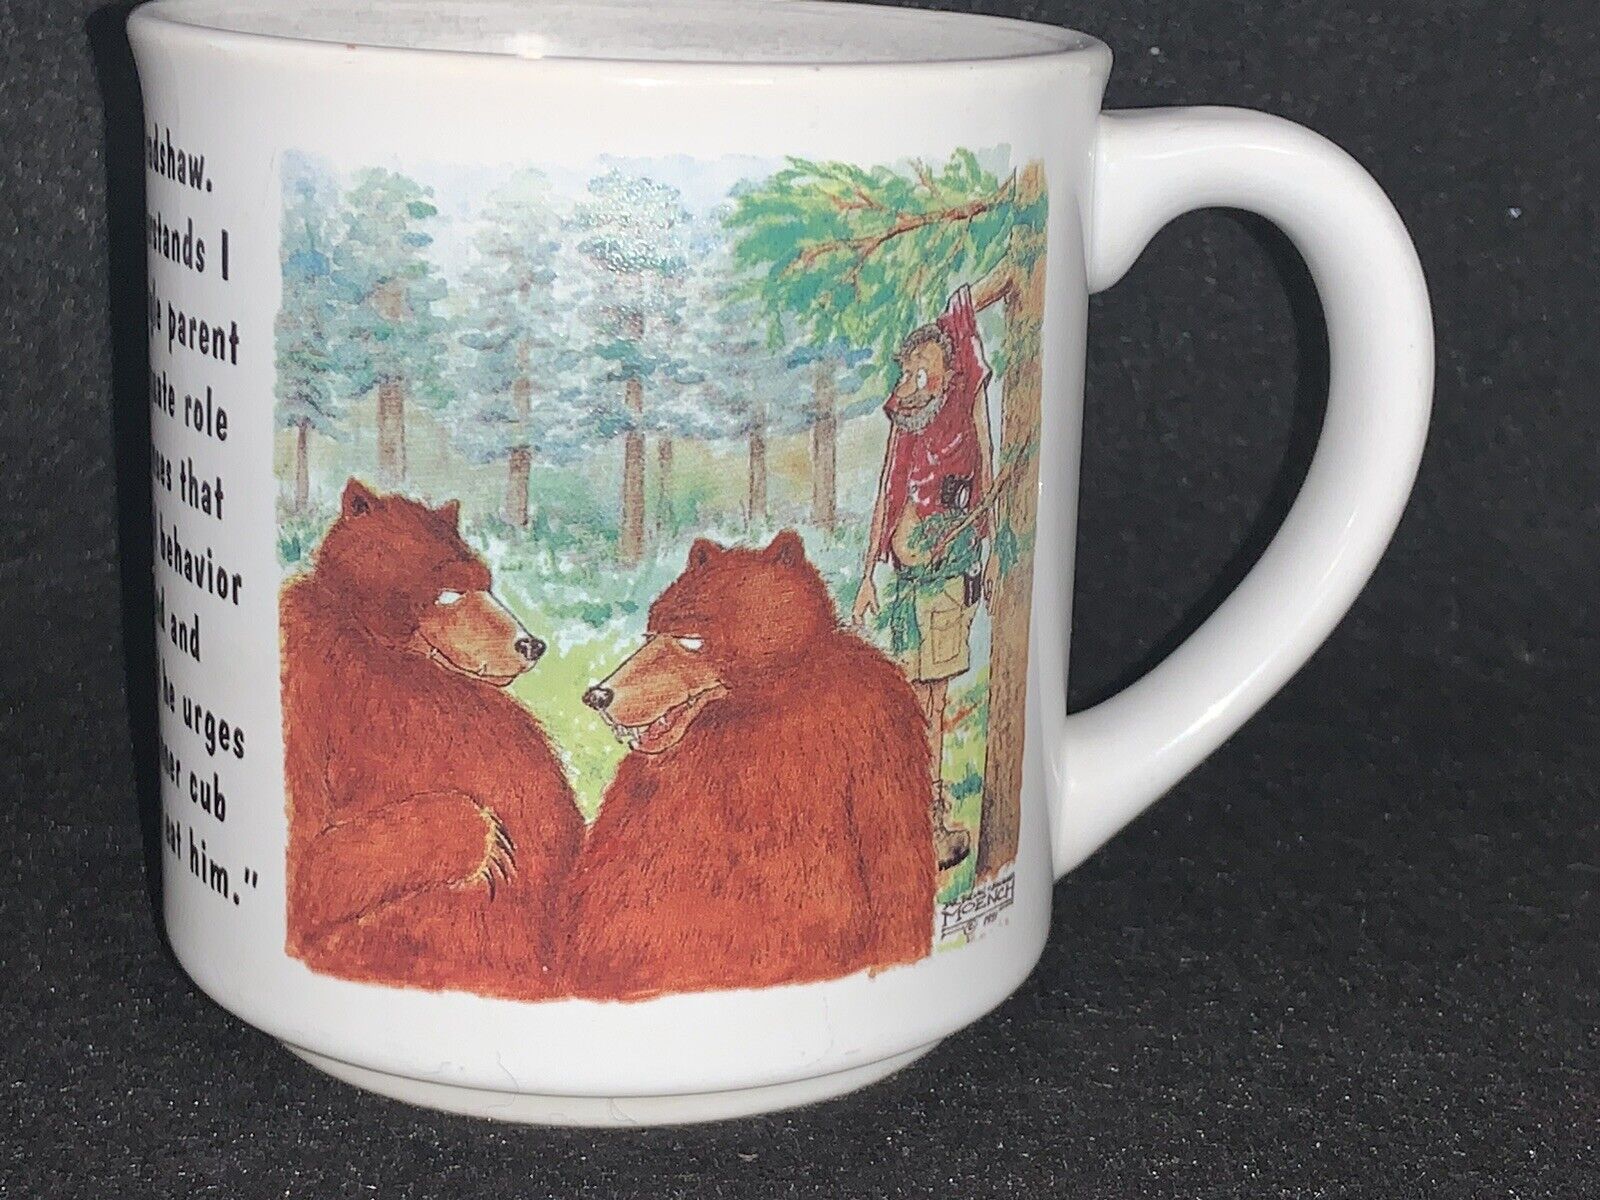 PSYCHOLOGIST COFFEE MUG CUP TEA BEARS VS HUNTER FUNNY 2 SIDED